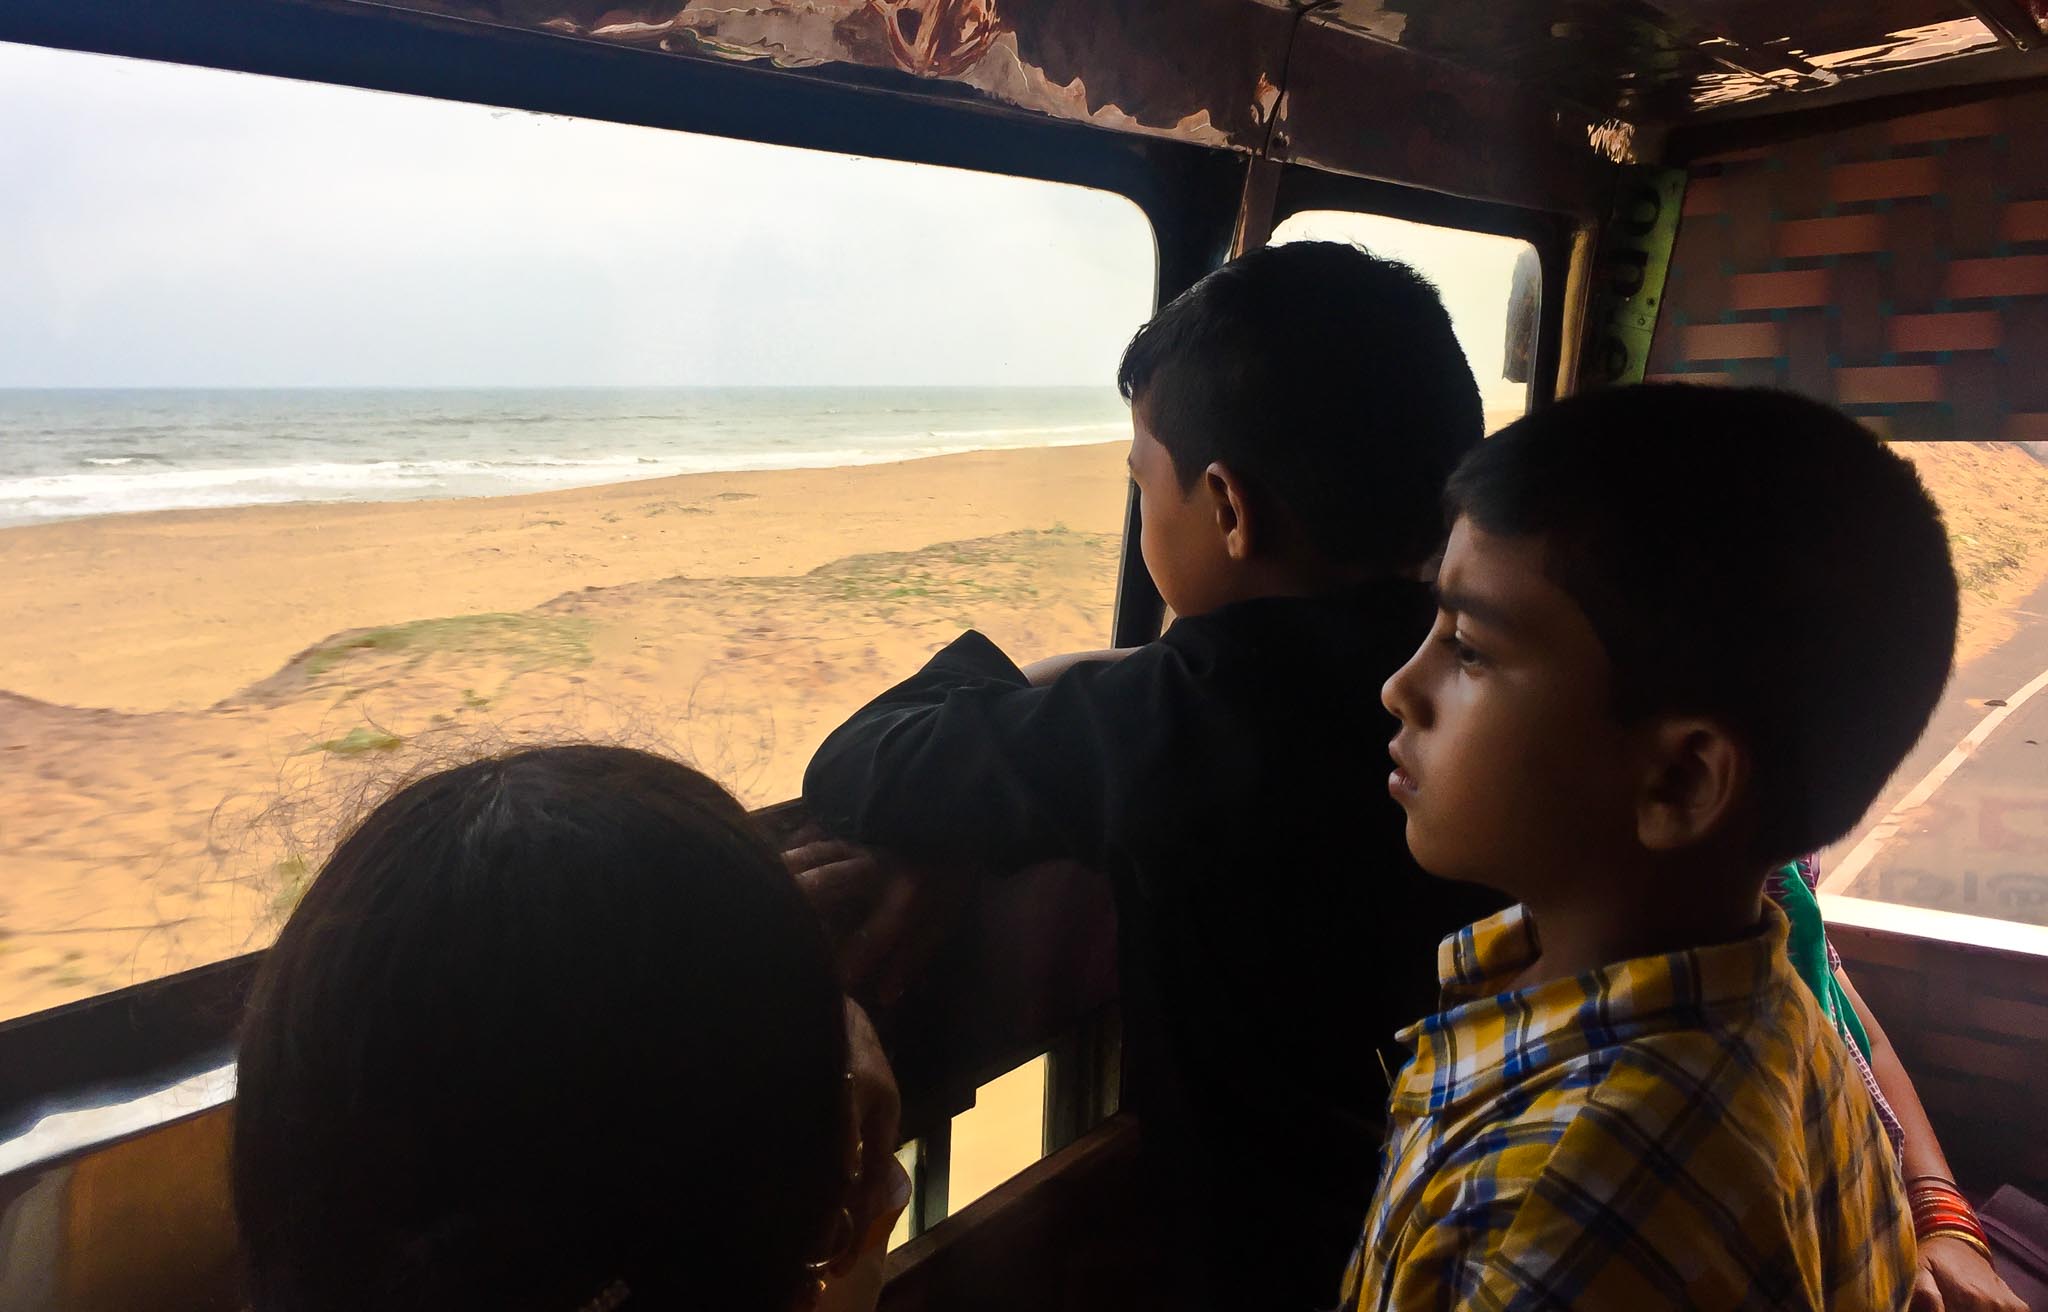 Boys watching the beach from school bus, Konark, Odisha, India